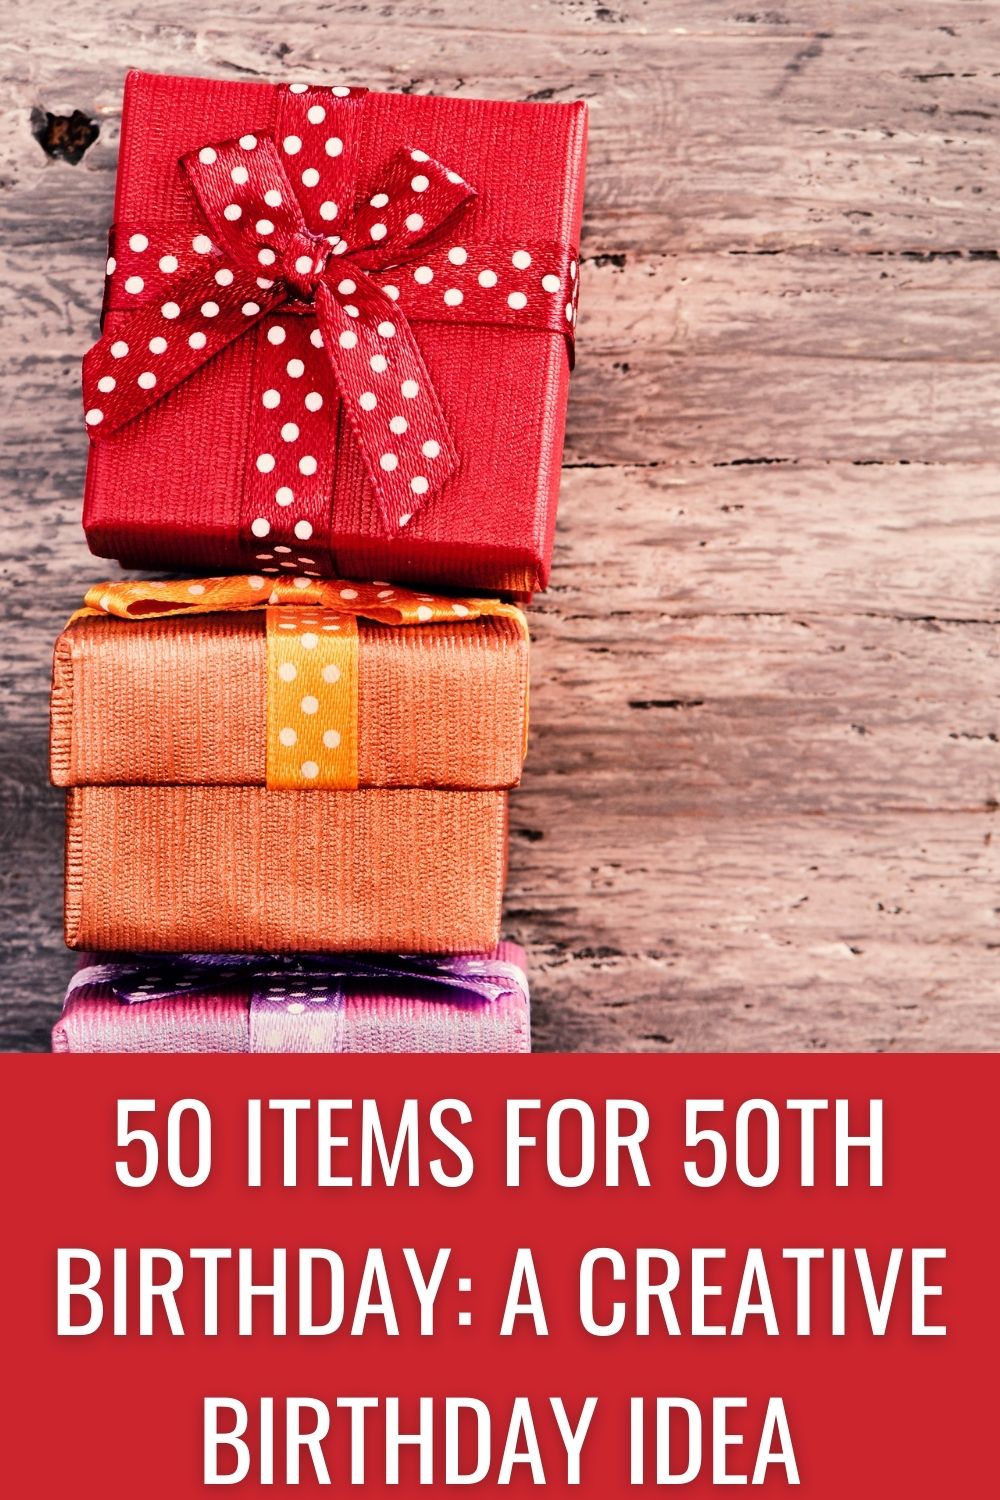 50 items for 50th birthday: a creative birthday idea